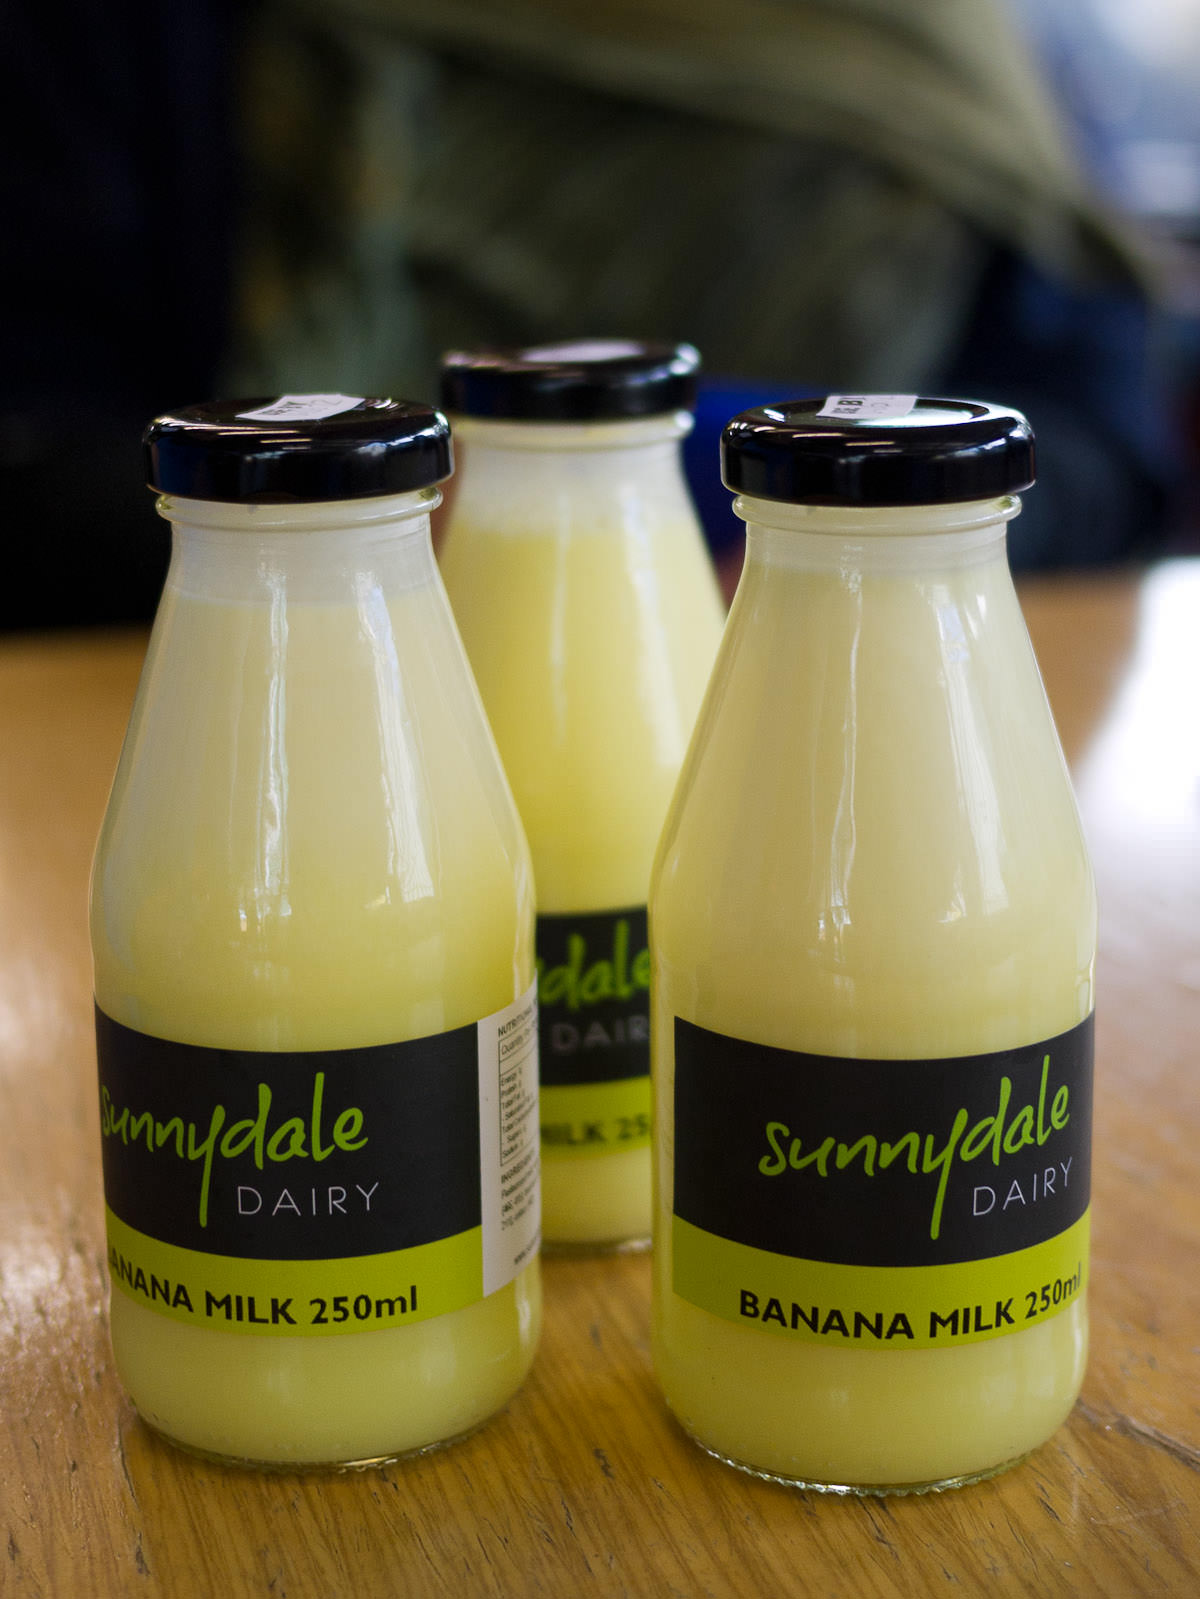 Sunnydale banana milk